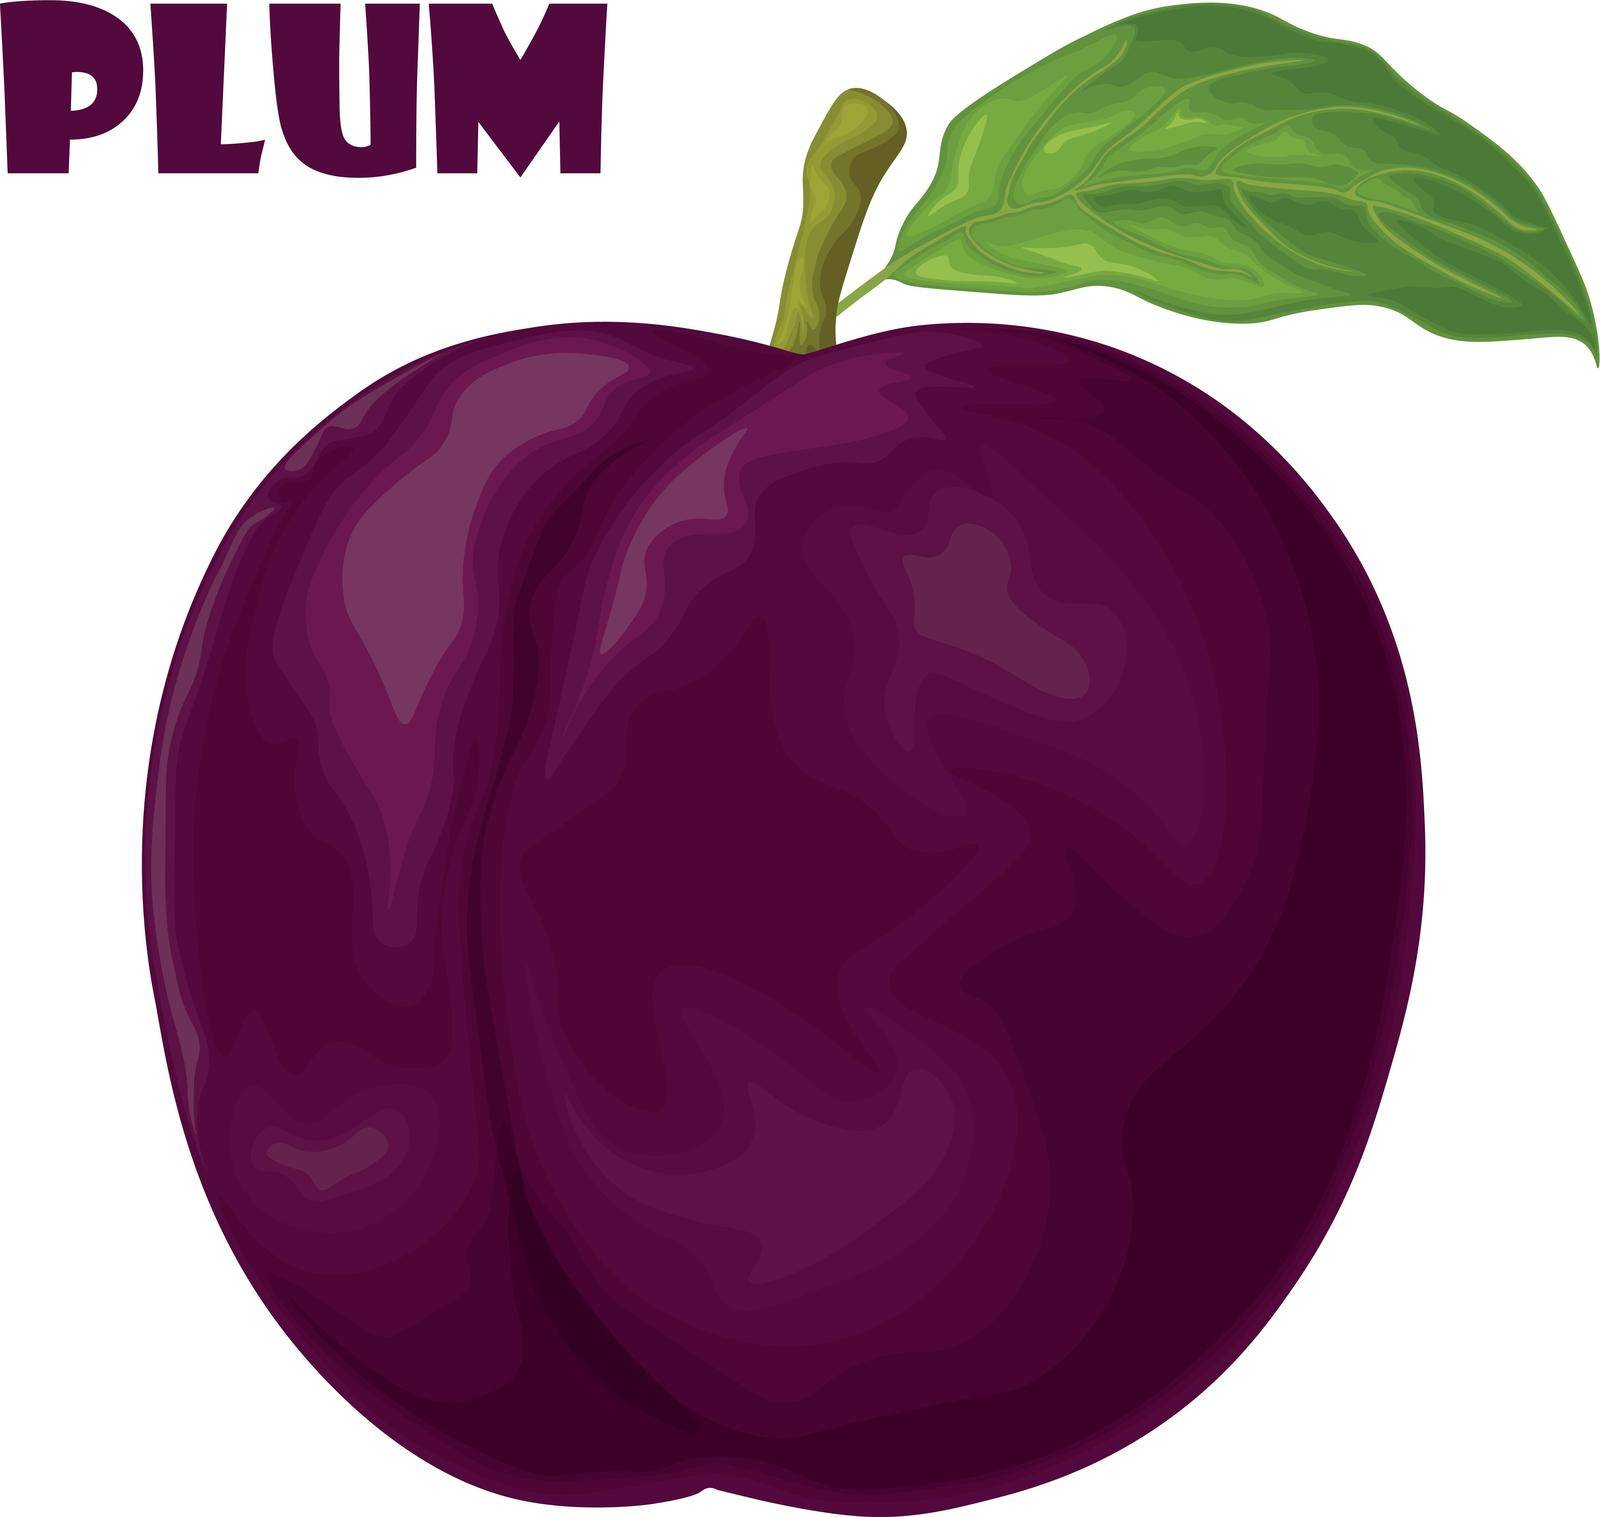 Plum. Dark purple plum. Fresh sweet plum. Ripe juicy plum berry. Vegetarian organic product. Vector illustration isolated on a white background.